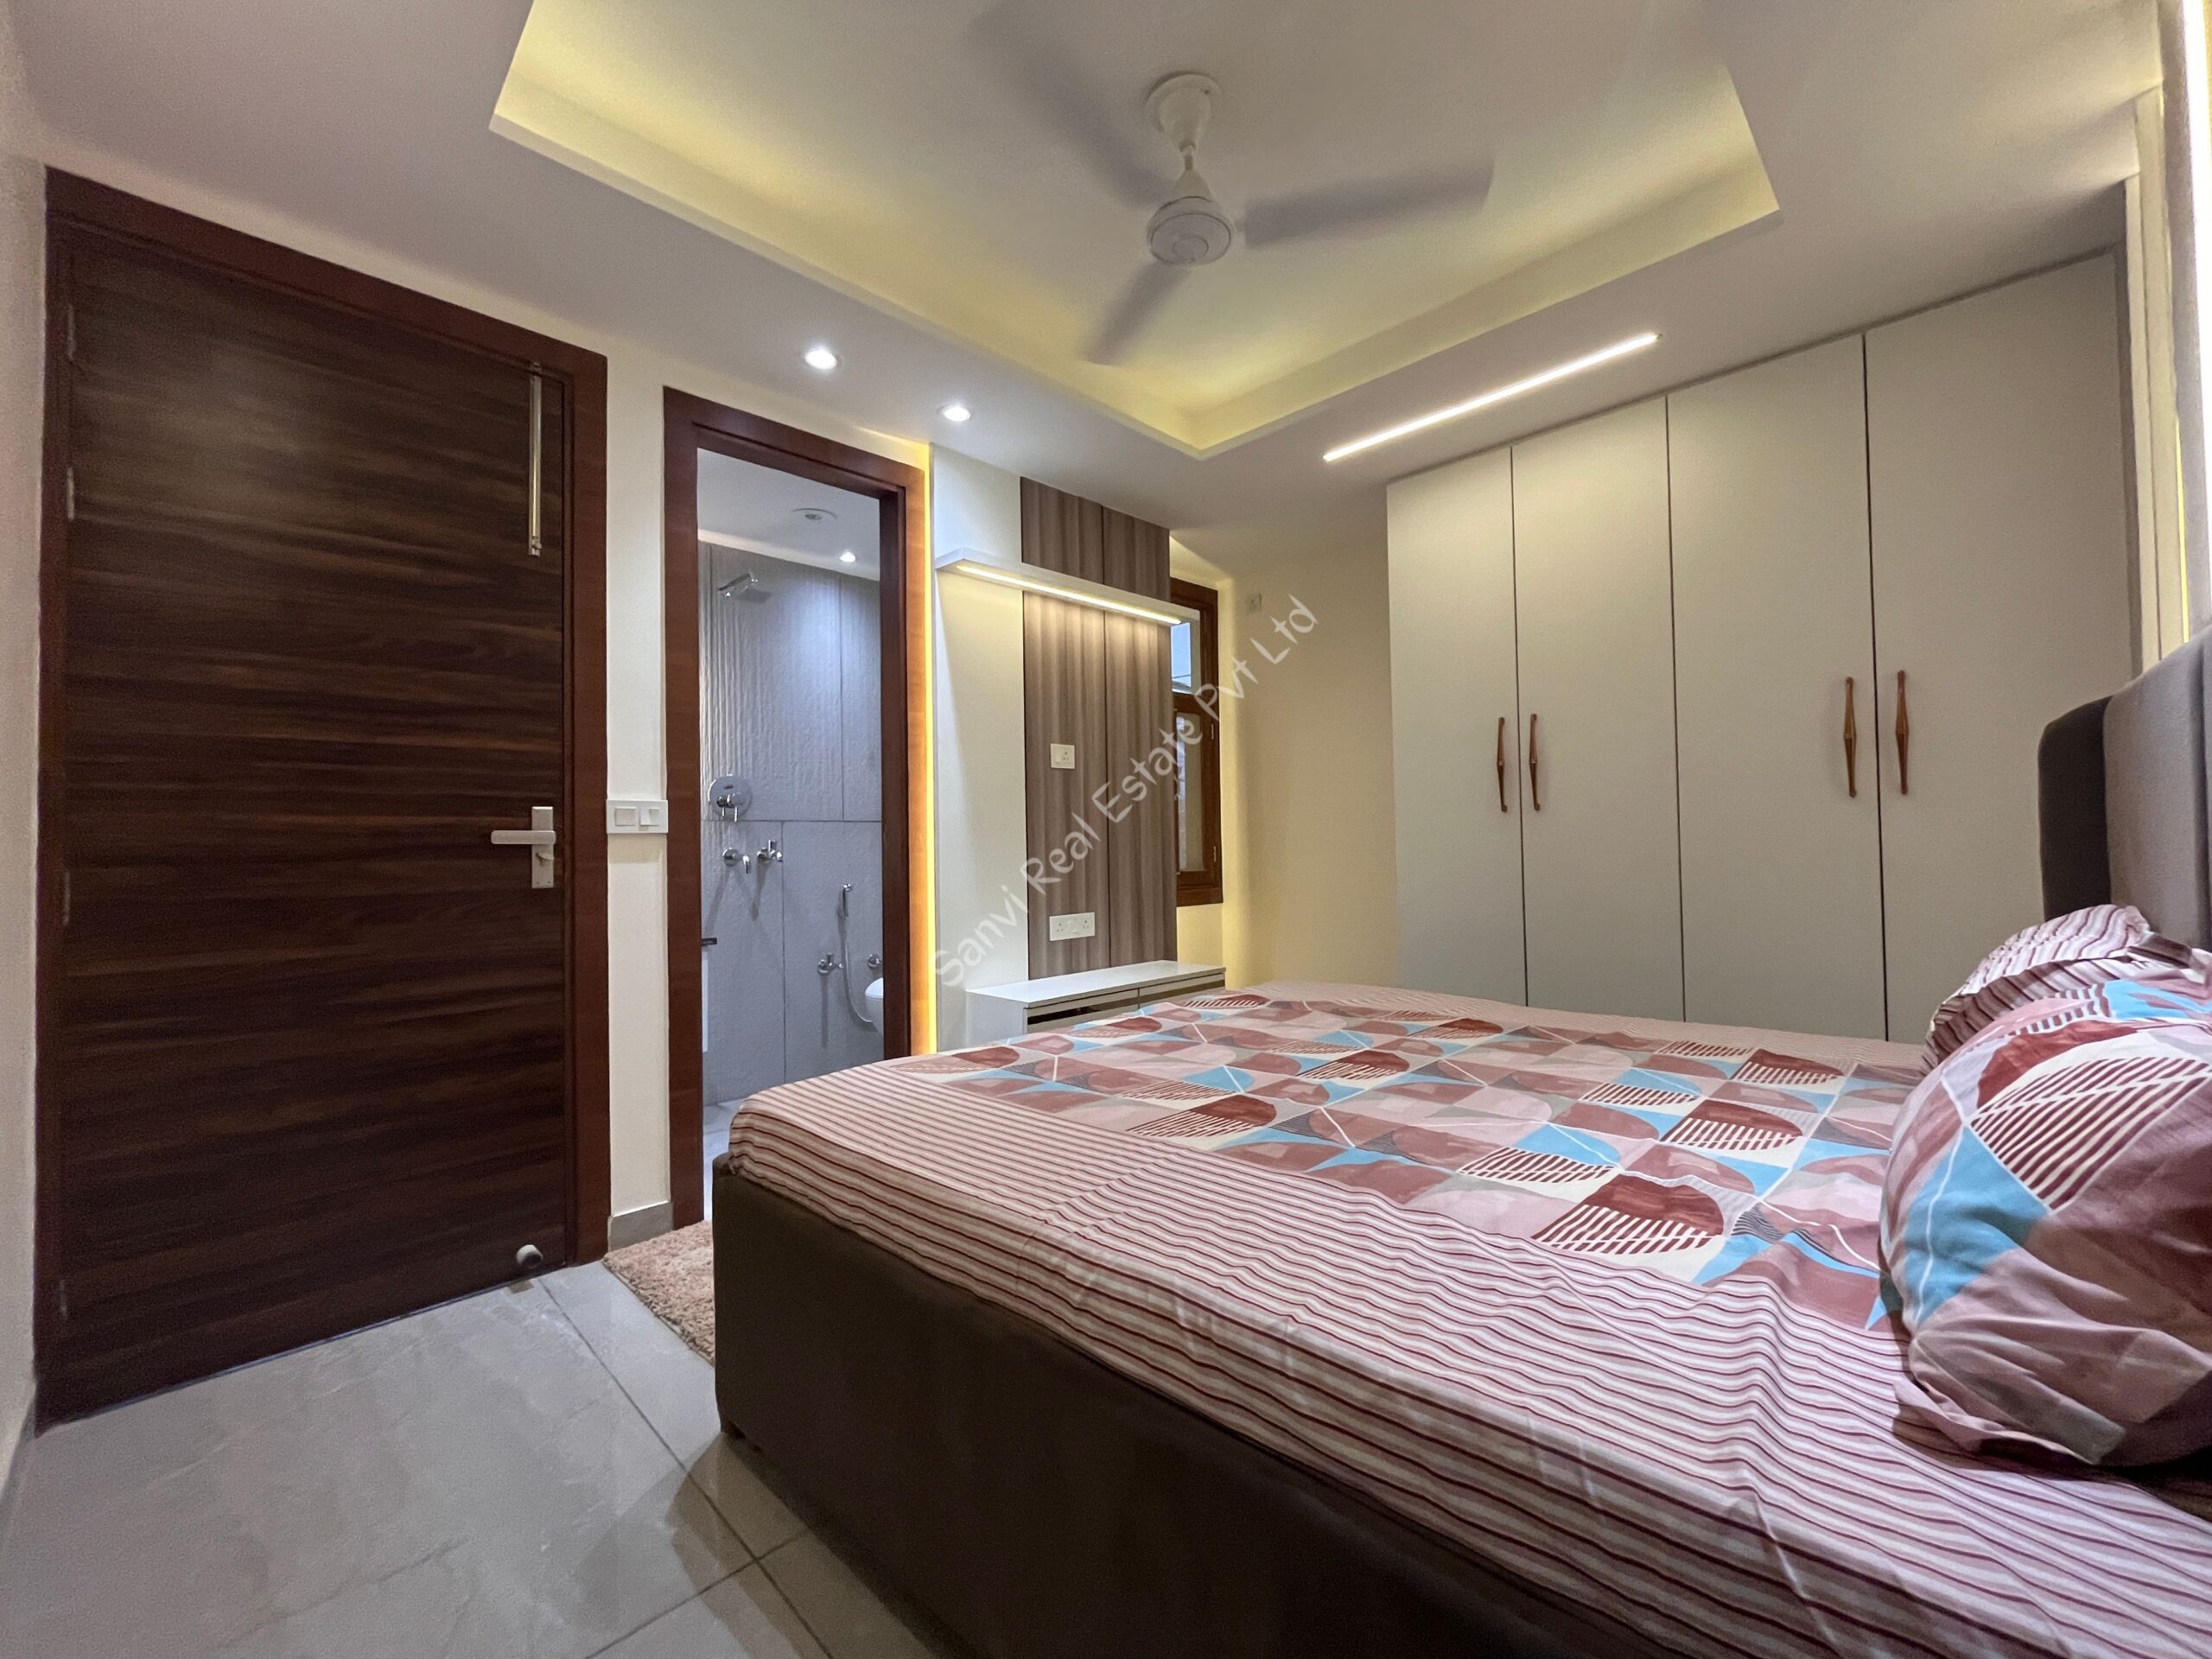 4 BHK Ultra Luxurious Flat in West Delhi | 4 BHK Property in Dwarka Mor | M-Sanvi Real Estate